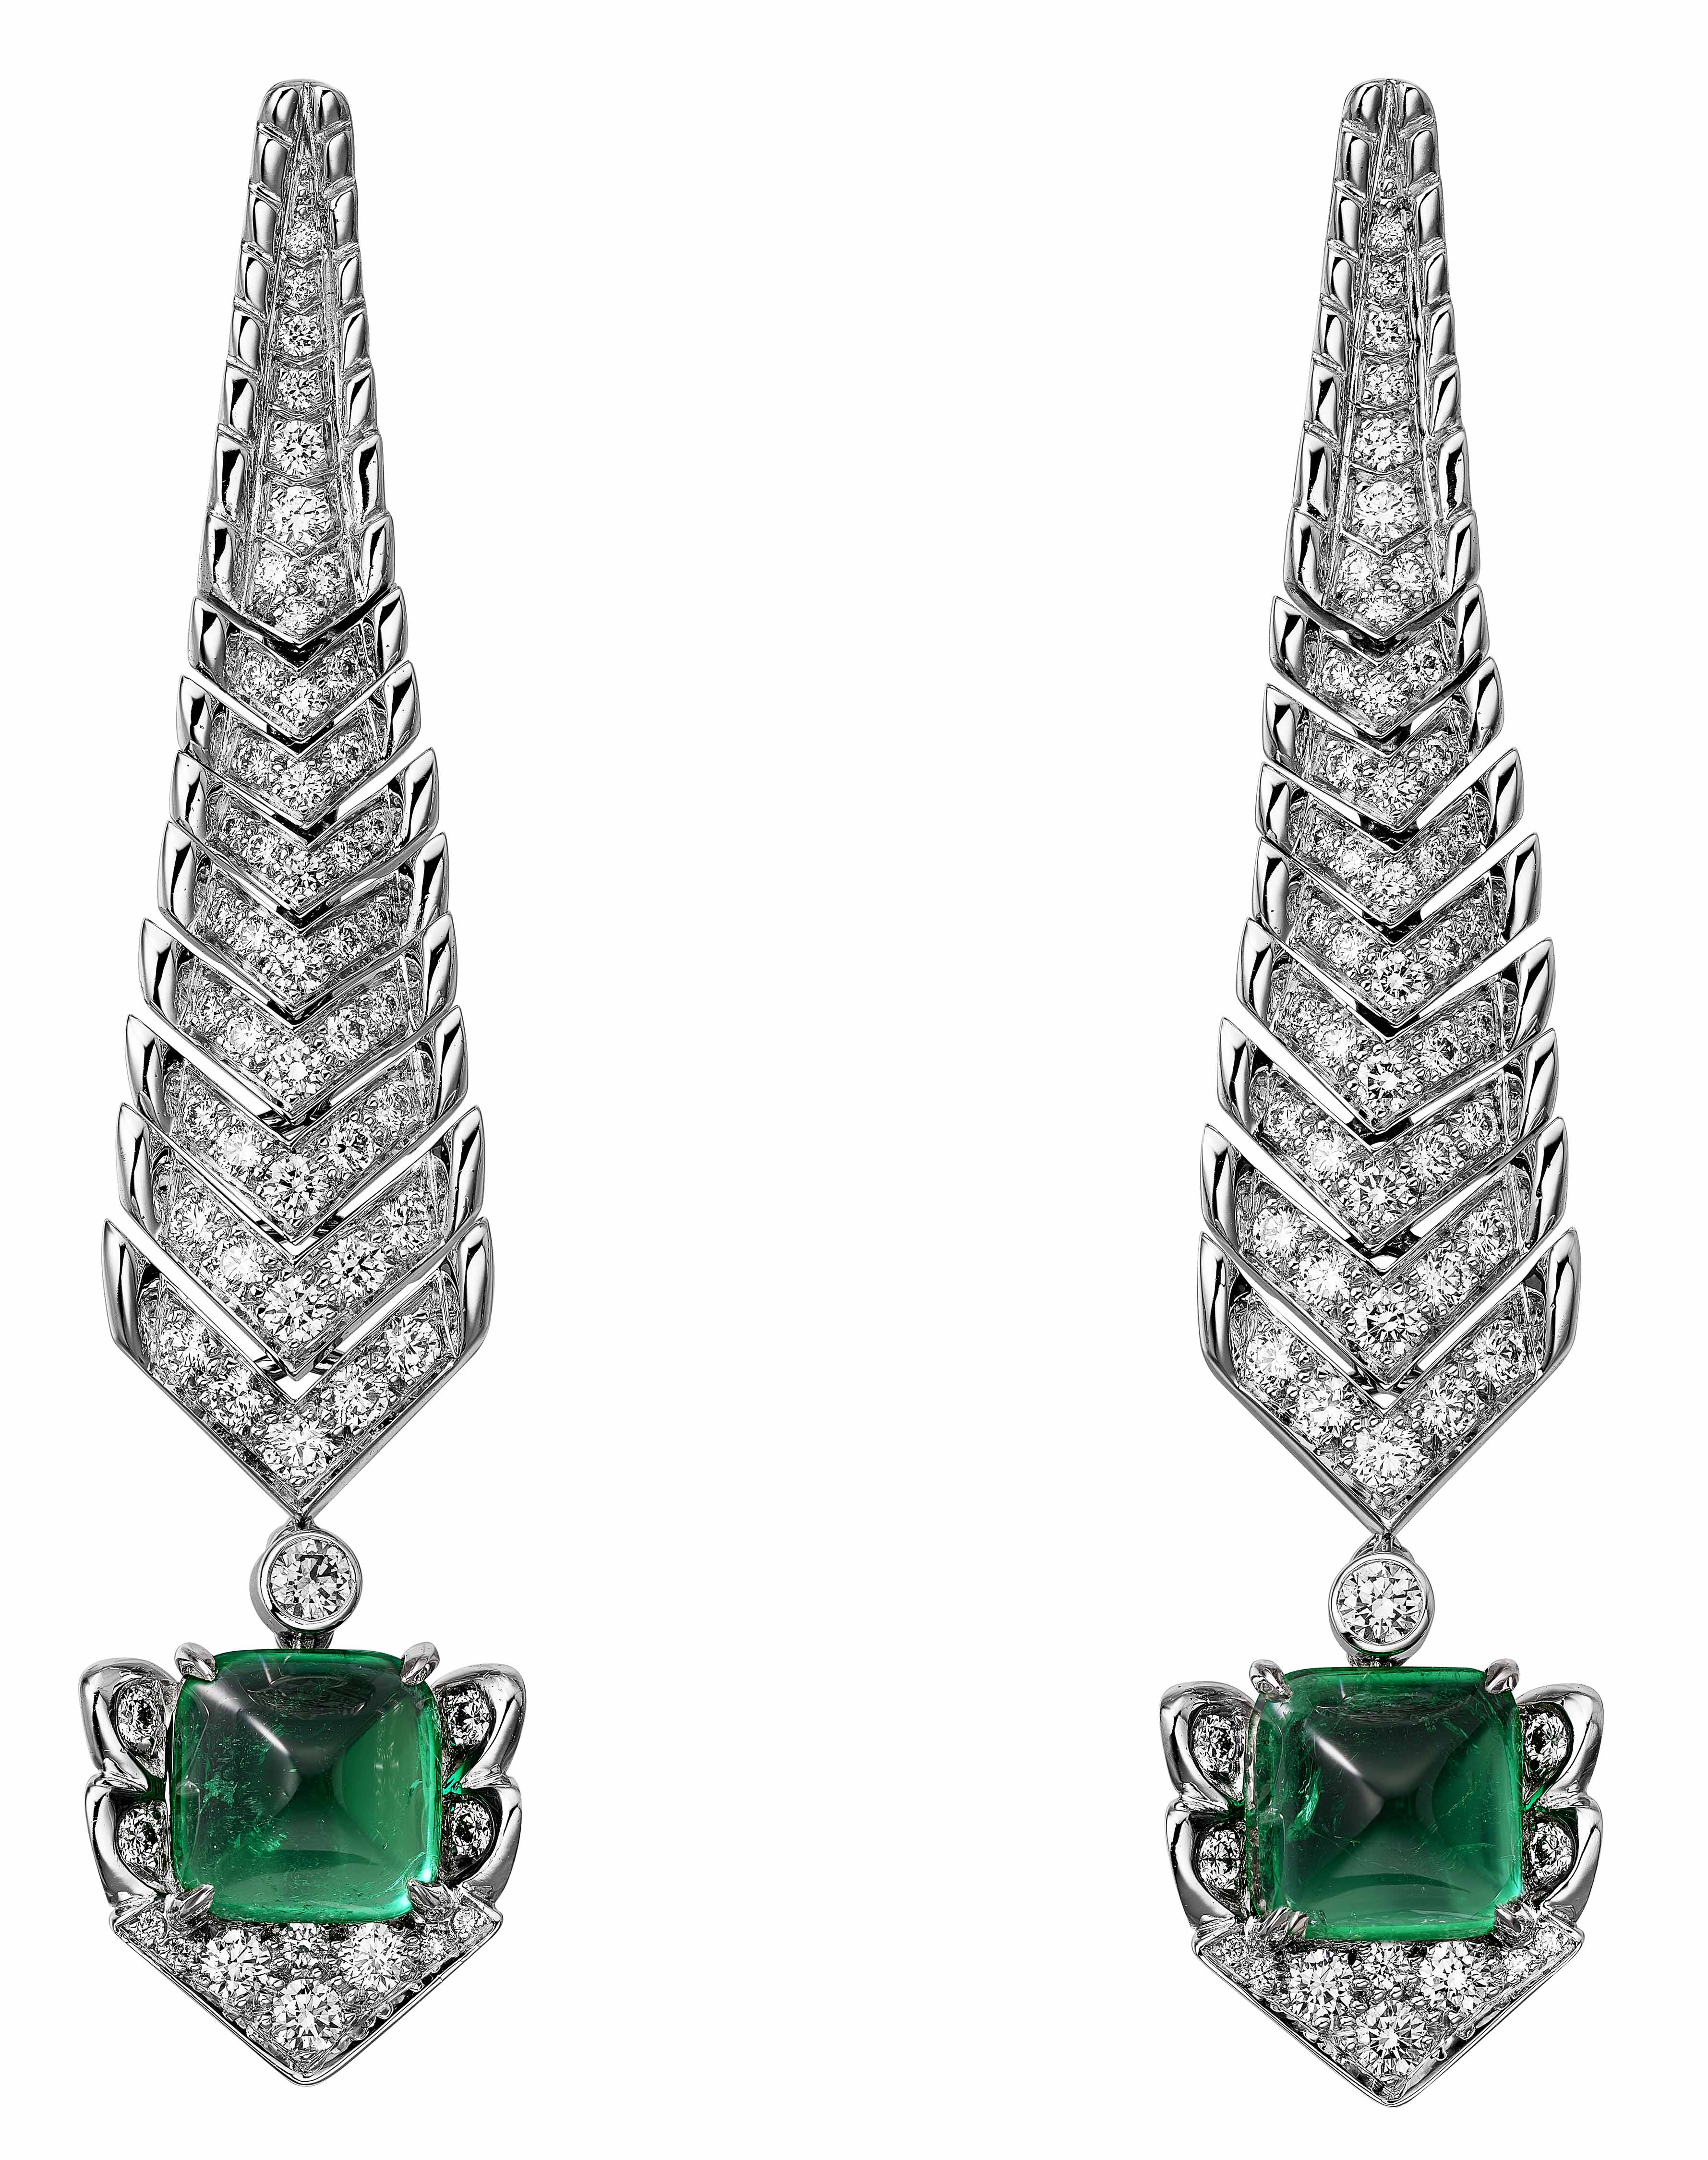 Cartier High Jewellery Earrings white gold diamonds emeralds